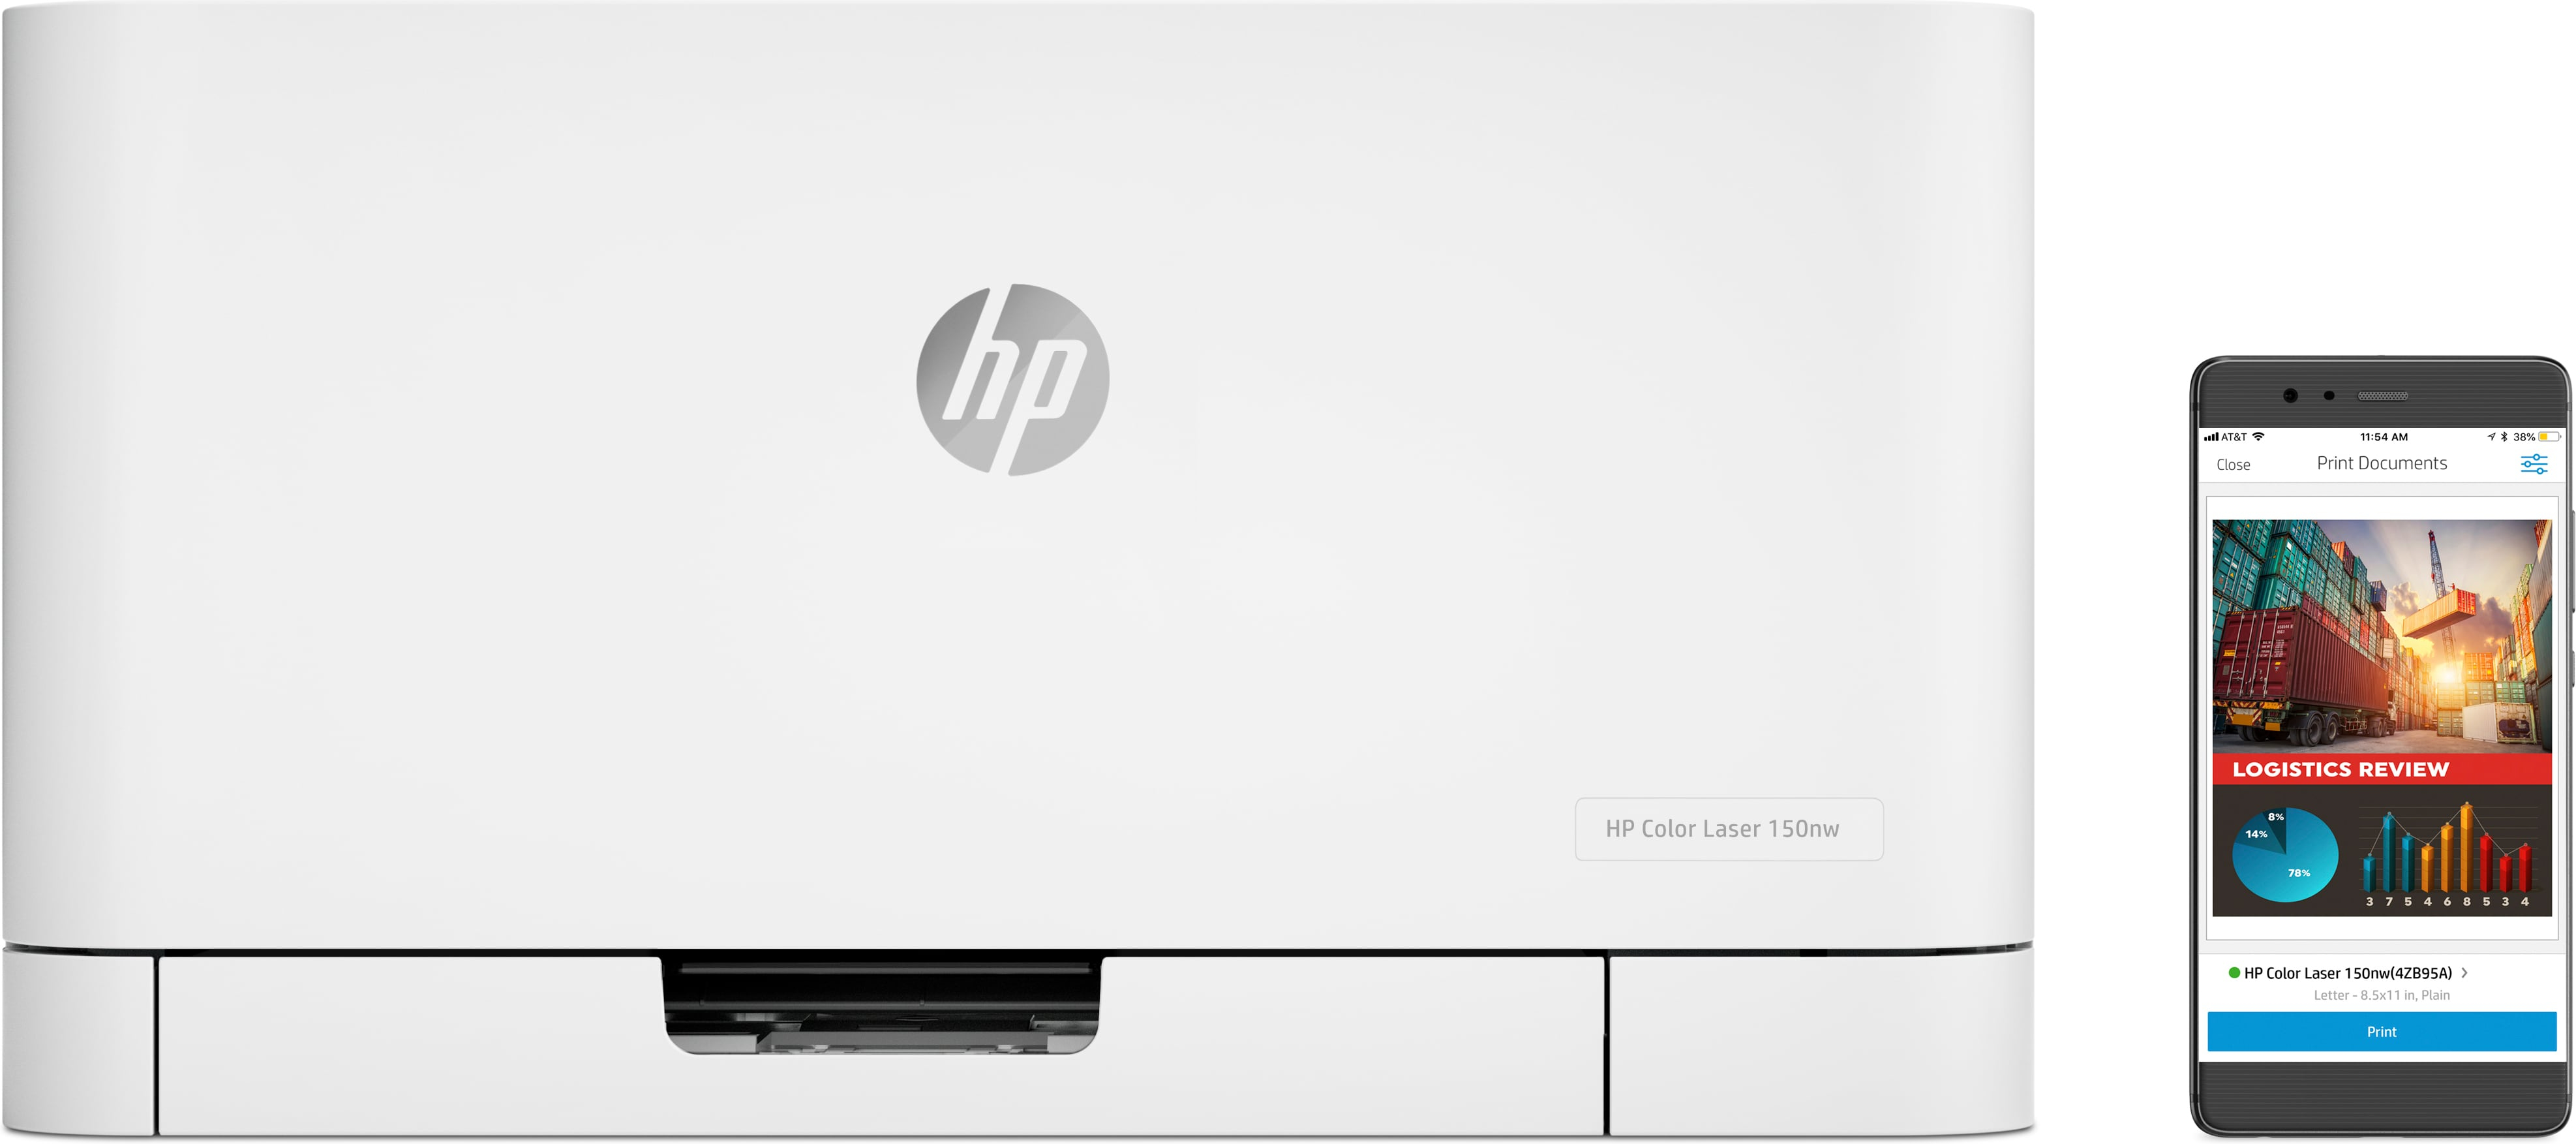 HP Color Laser 150nw, Color, Stampante per Stampa